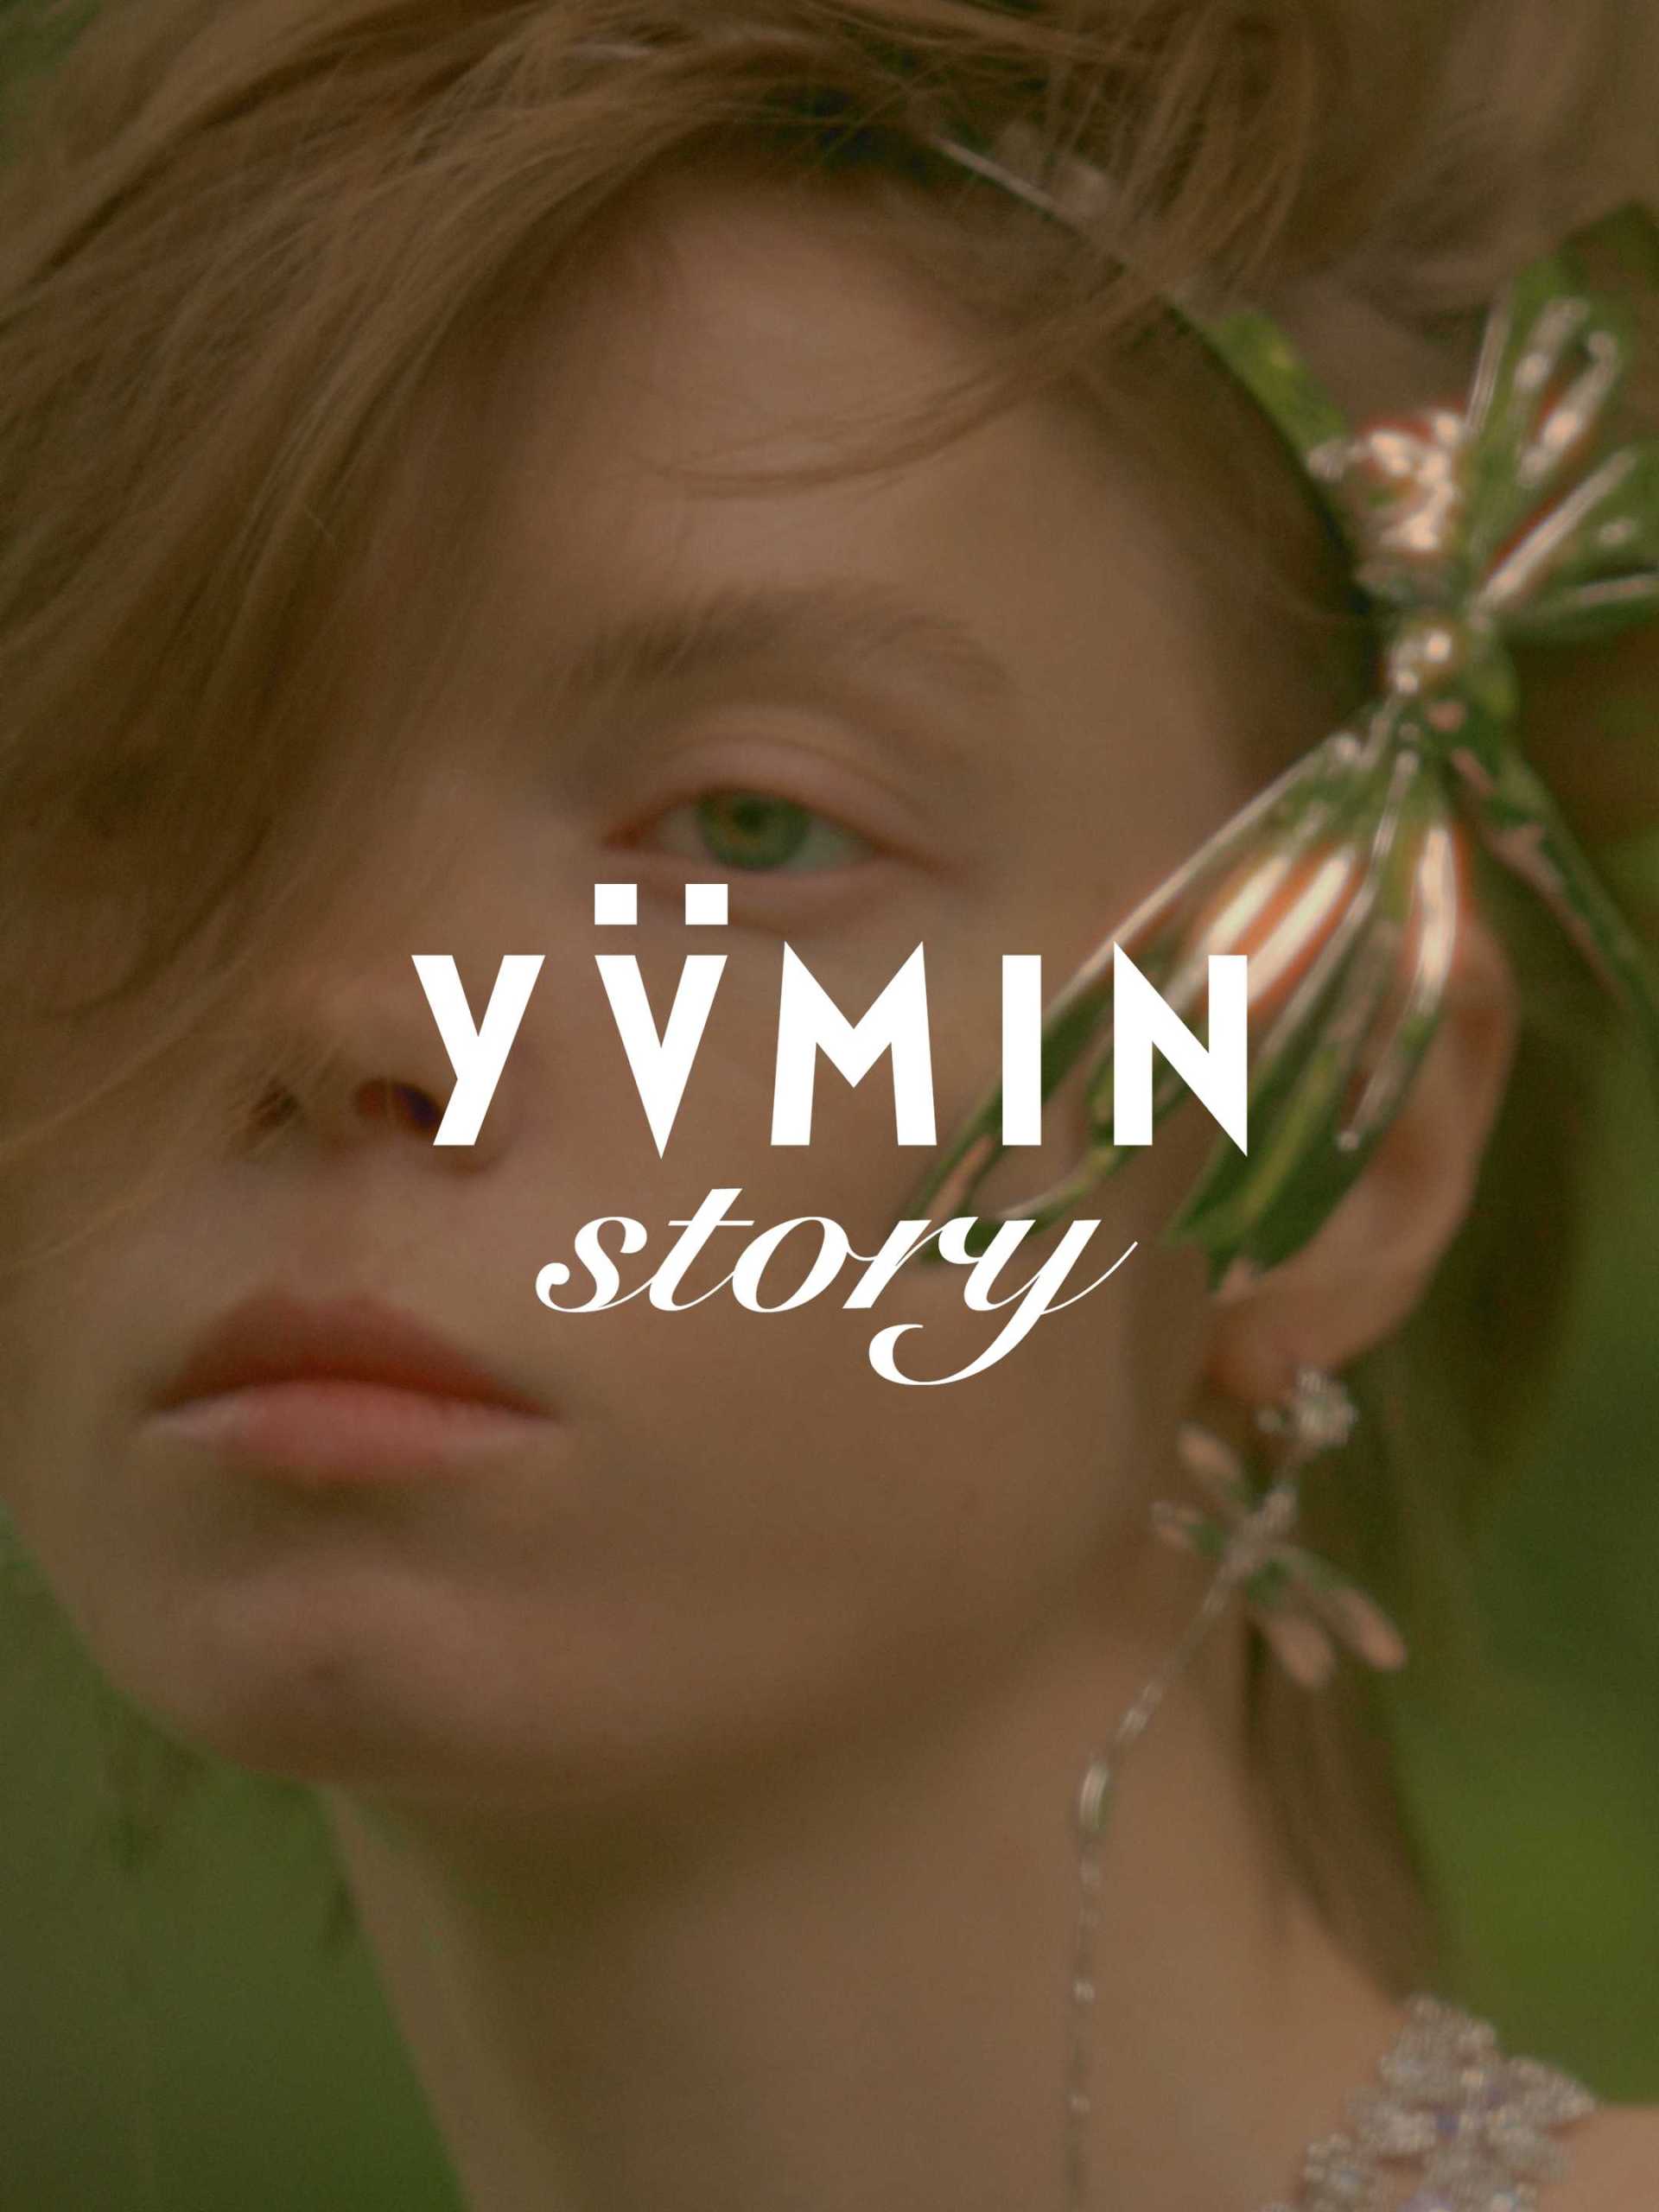 Yvmin尤目 概念首饰 - Story Video “DAY” - 竖屏